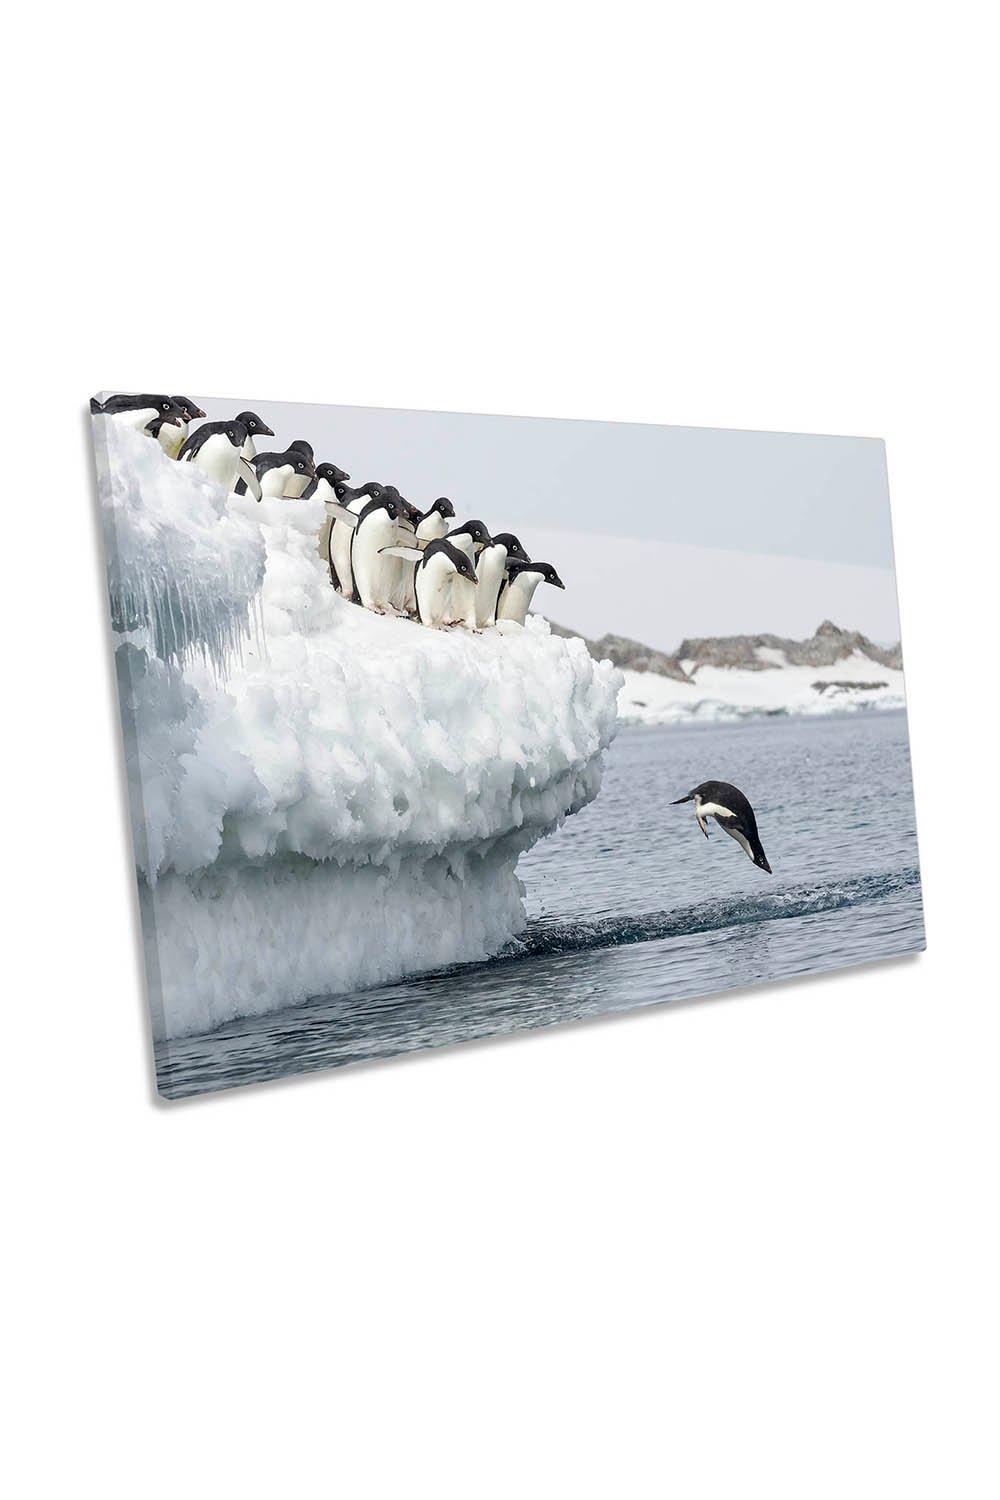 Penguin Splash Dive Wildlife Canvas Wall Art Picture Print